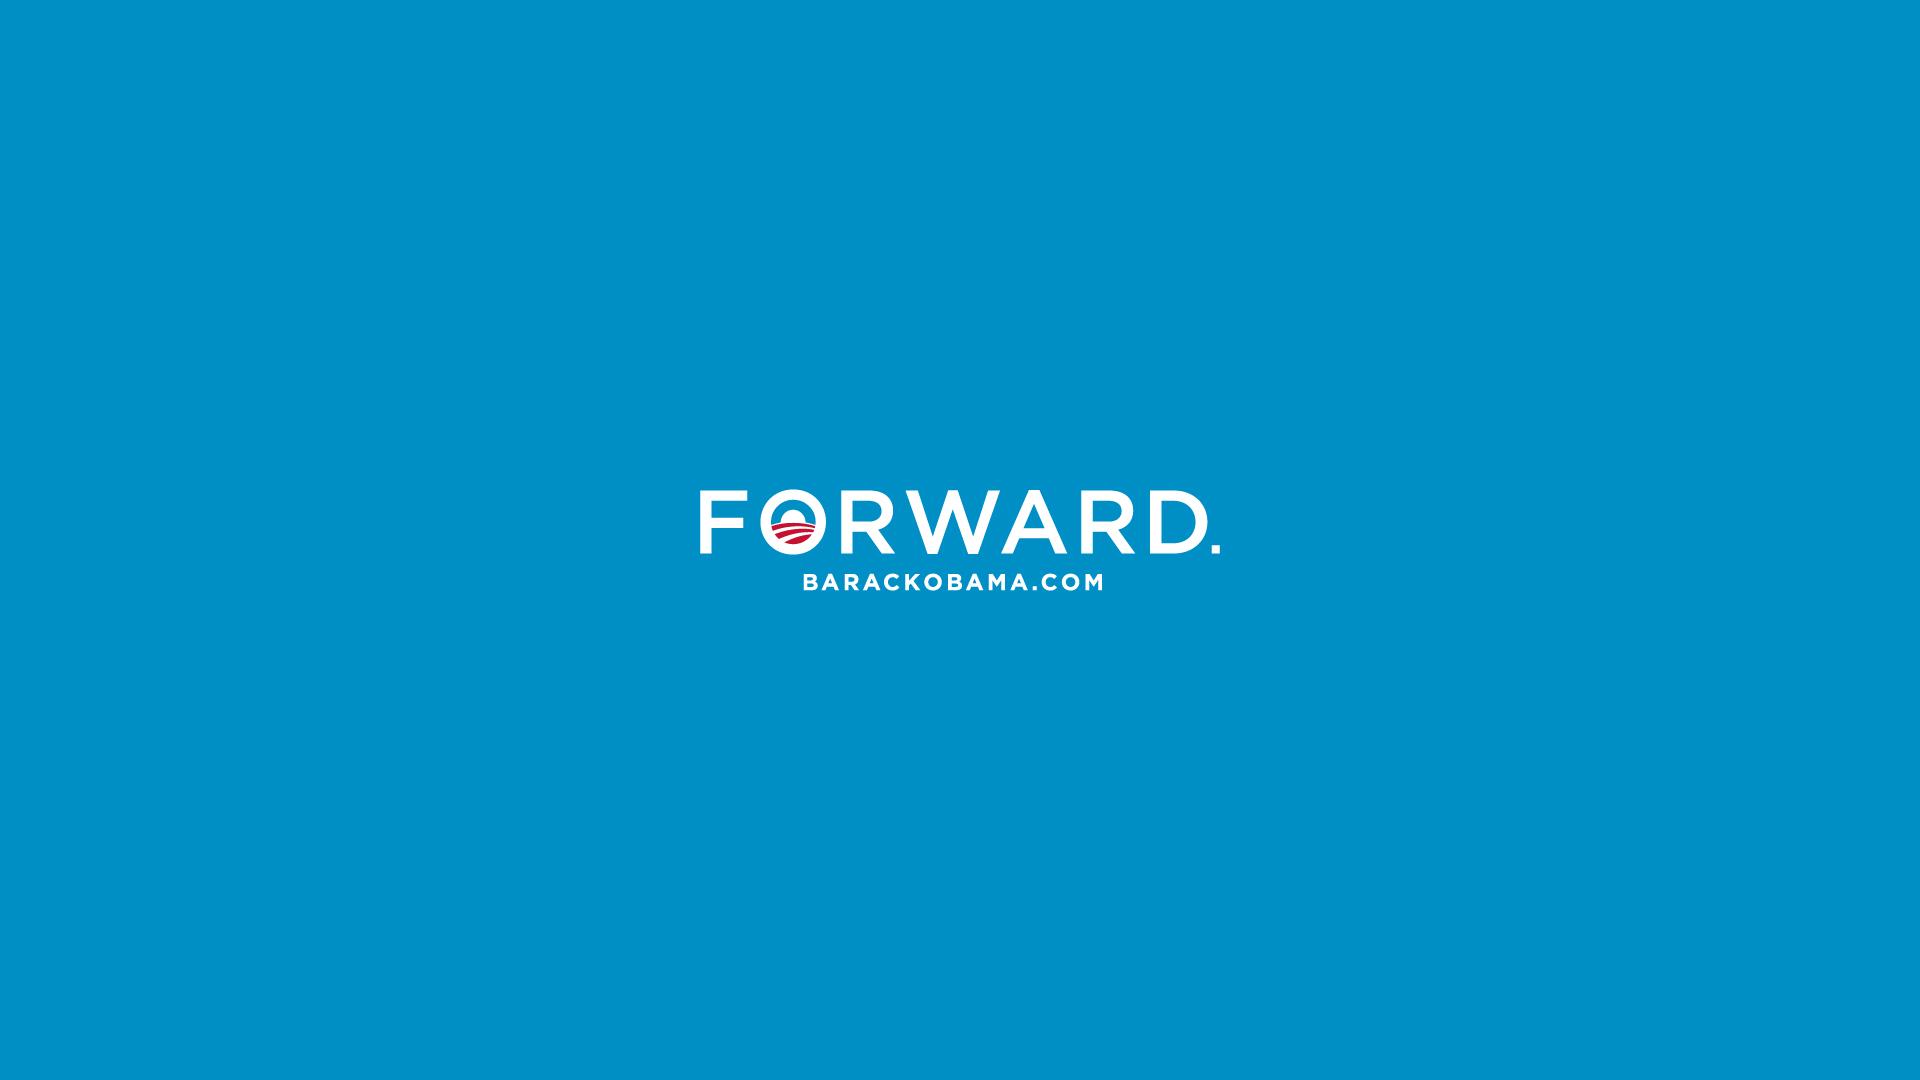 Obama 2012 Forward Windows 7 Theme With 8 Wallpaper